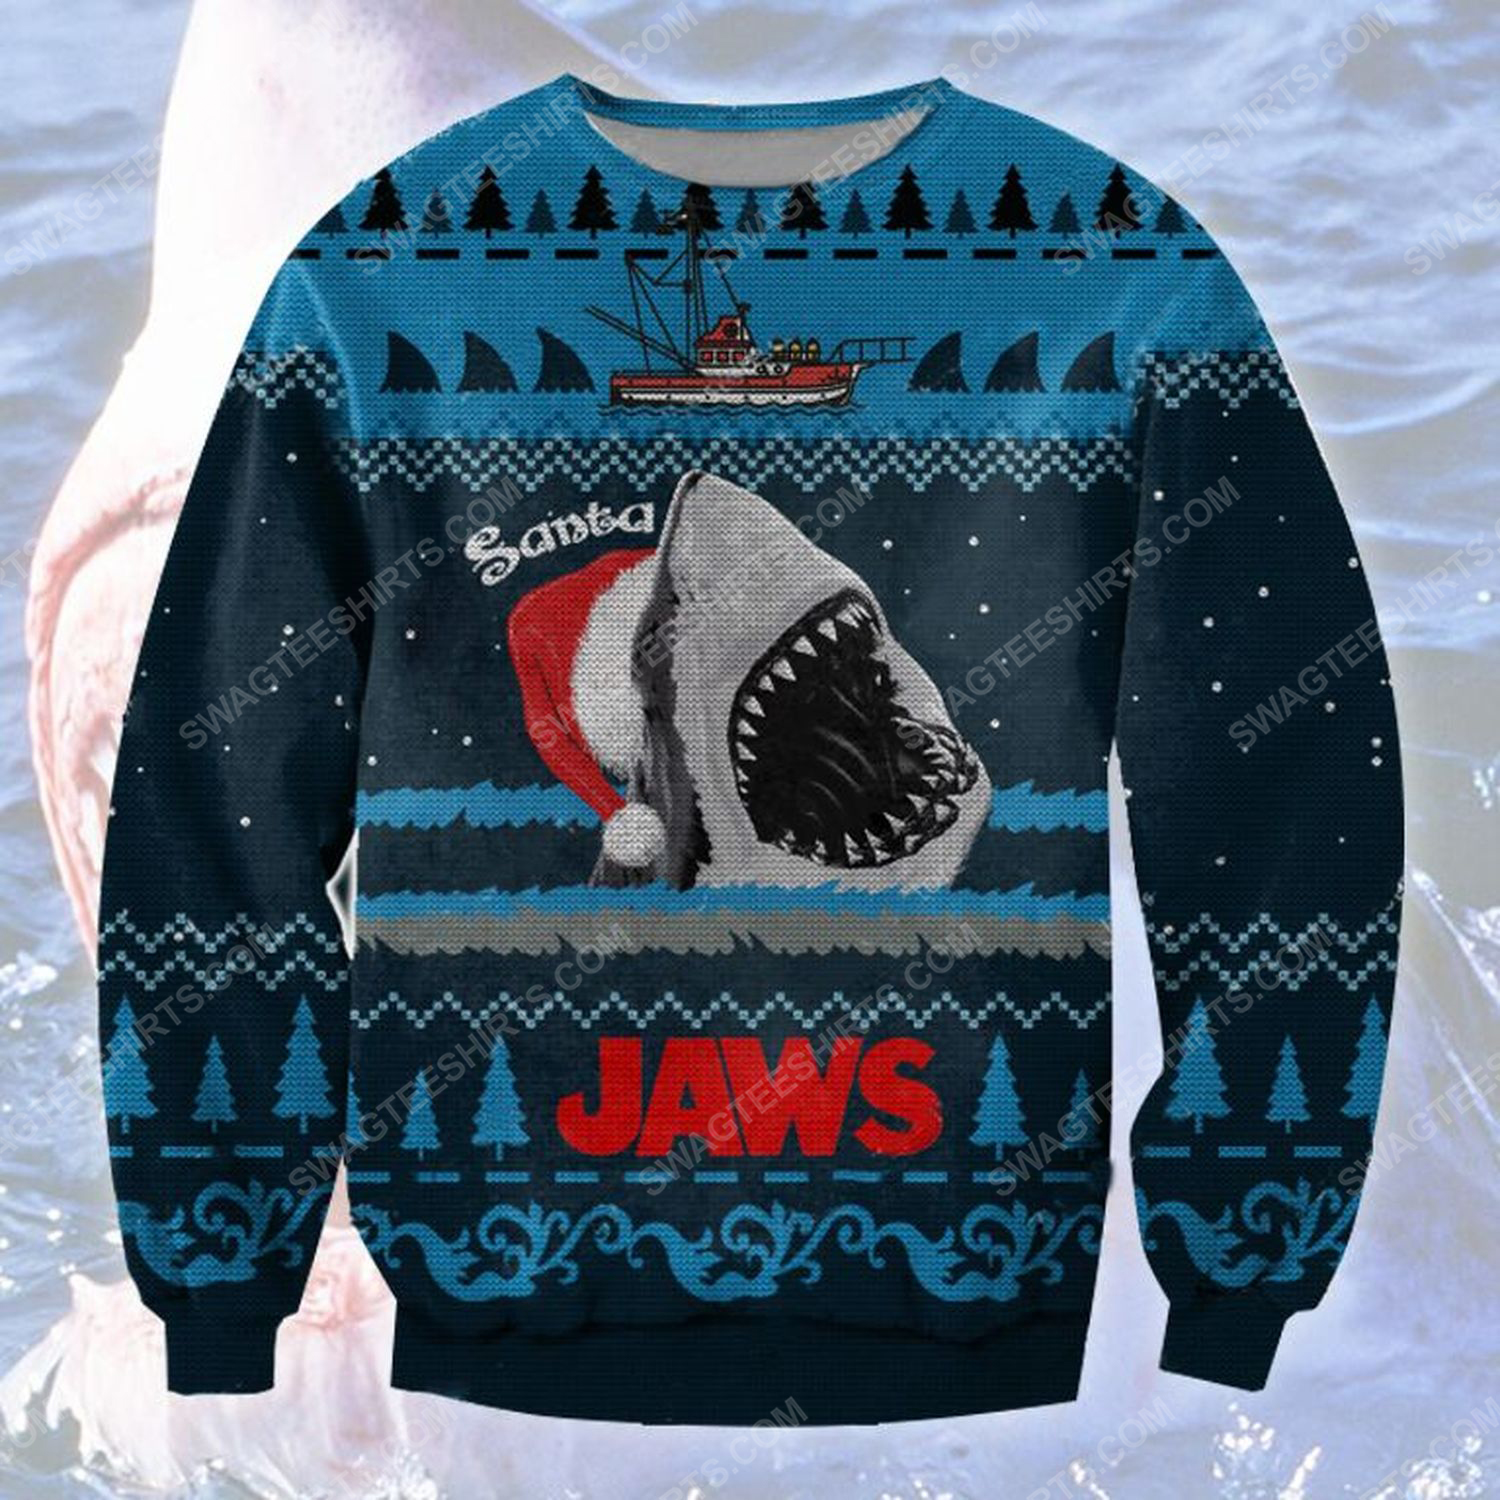 Santa jaws ugly christmas sweater - Copy (3)